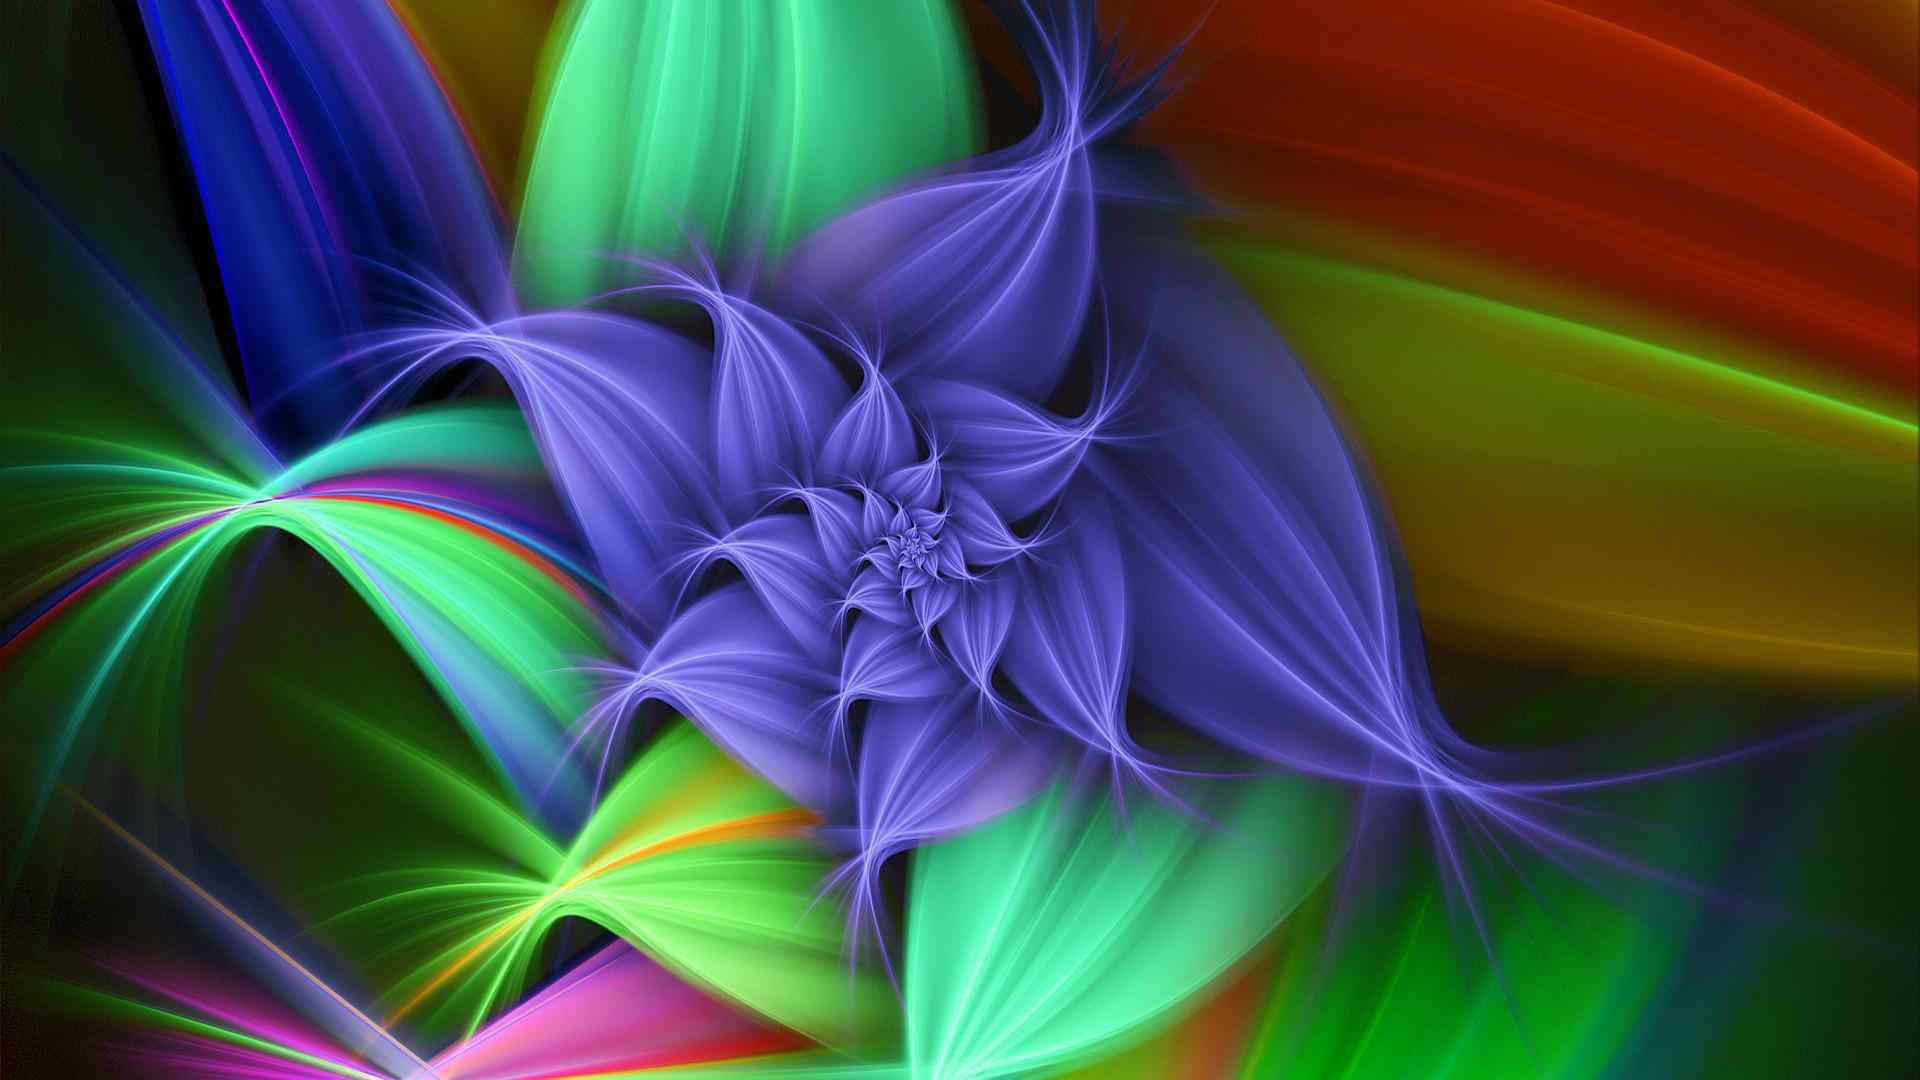 Abstract Flower Full Desktop Screen Hd Background